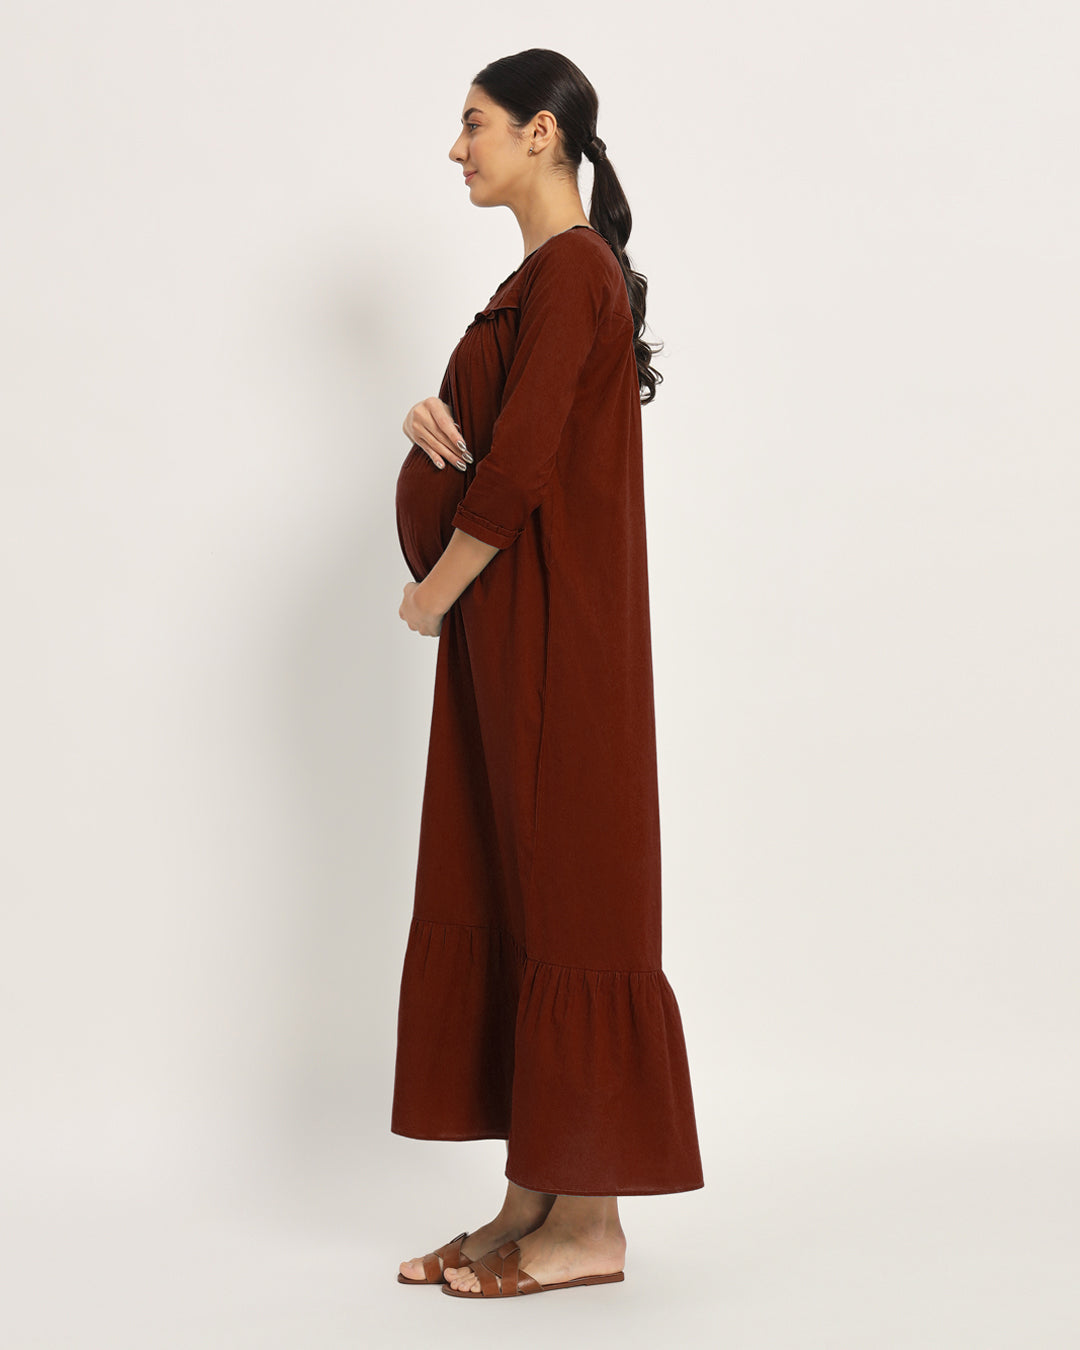 Combo: Black & Russet Red Bella Mama Maternity & Nursing Dress-Set of 2